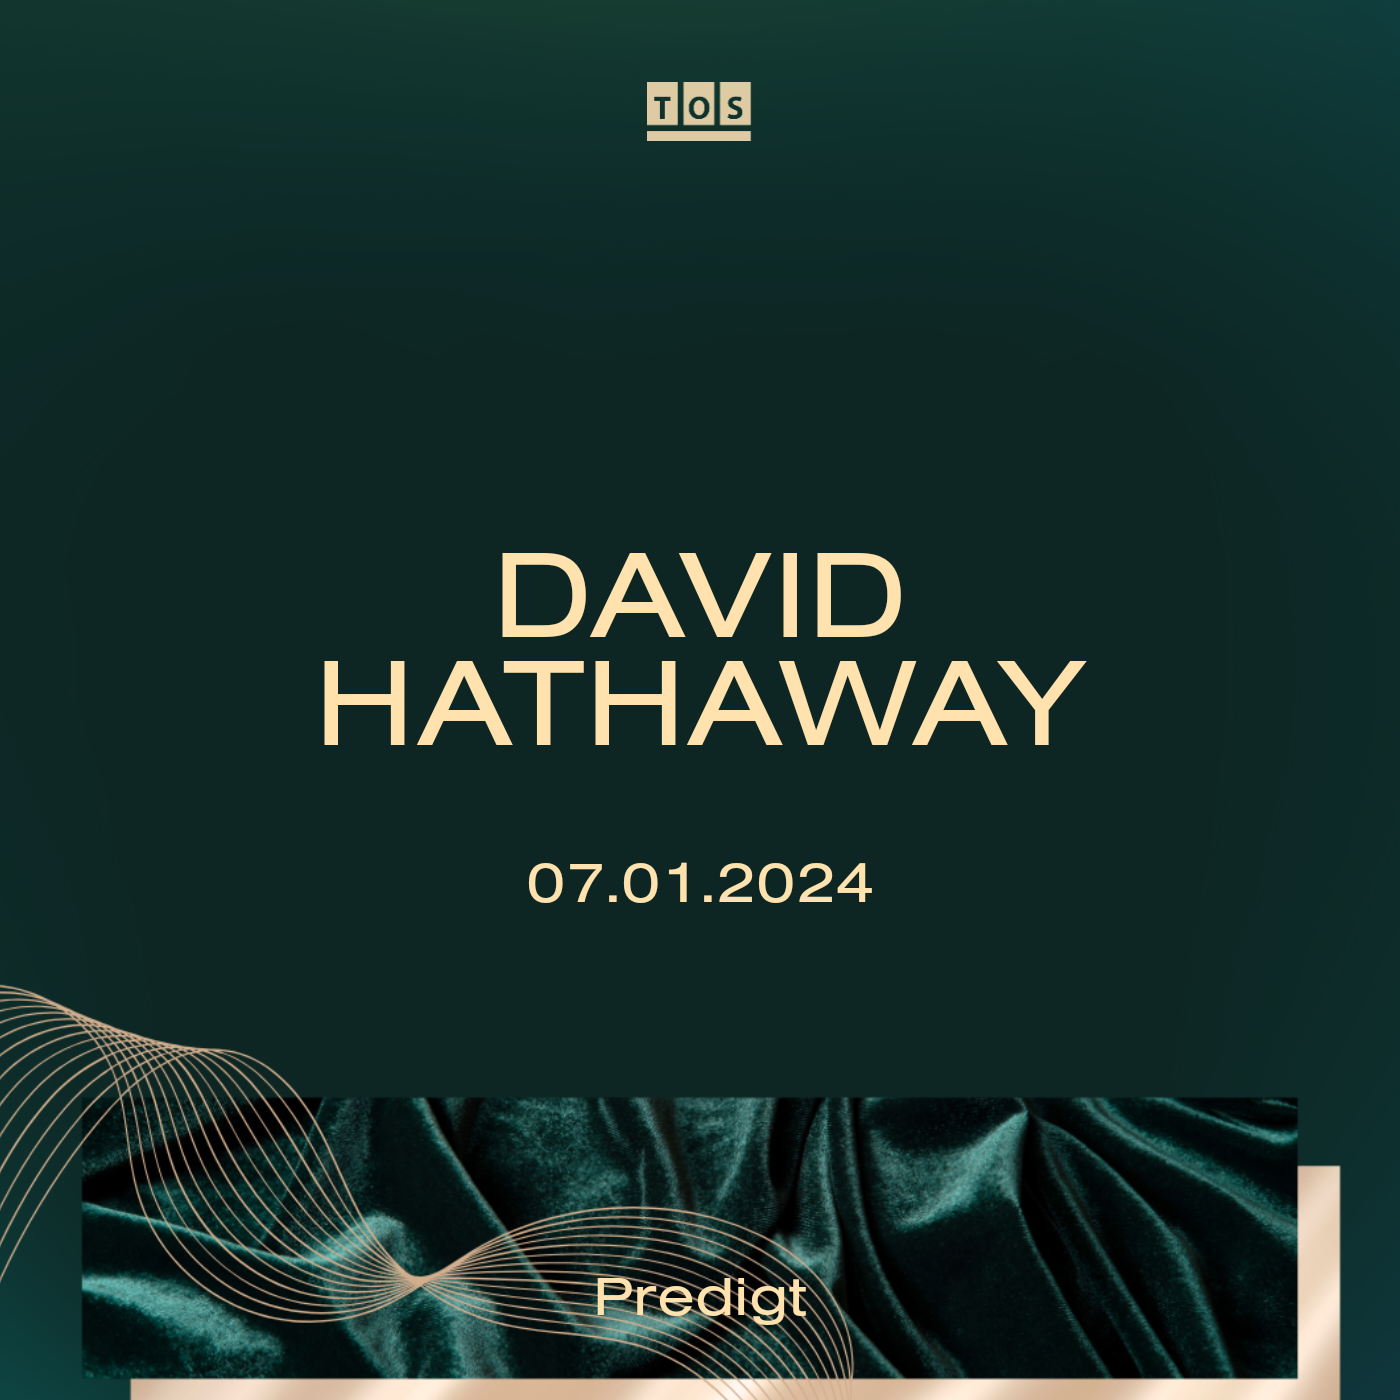 David Hathaway | 07.01.2024 hero artwork